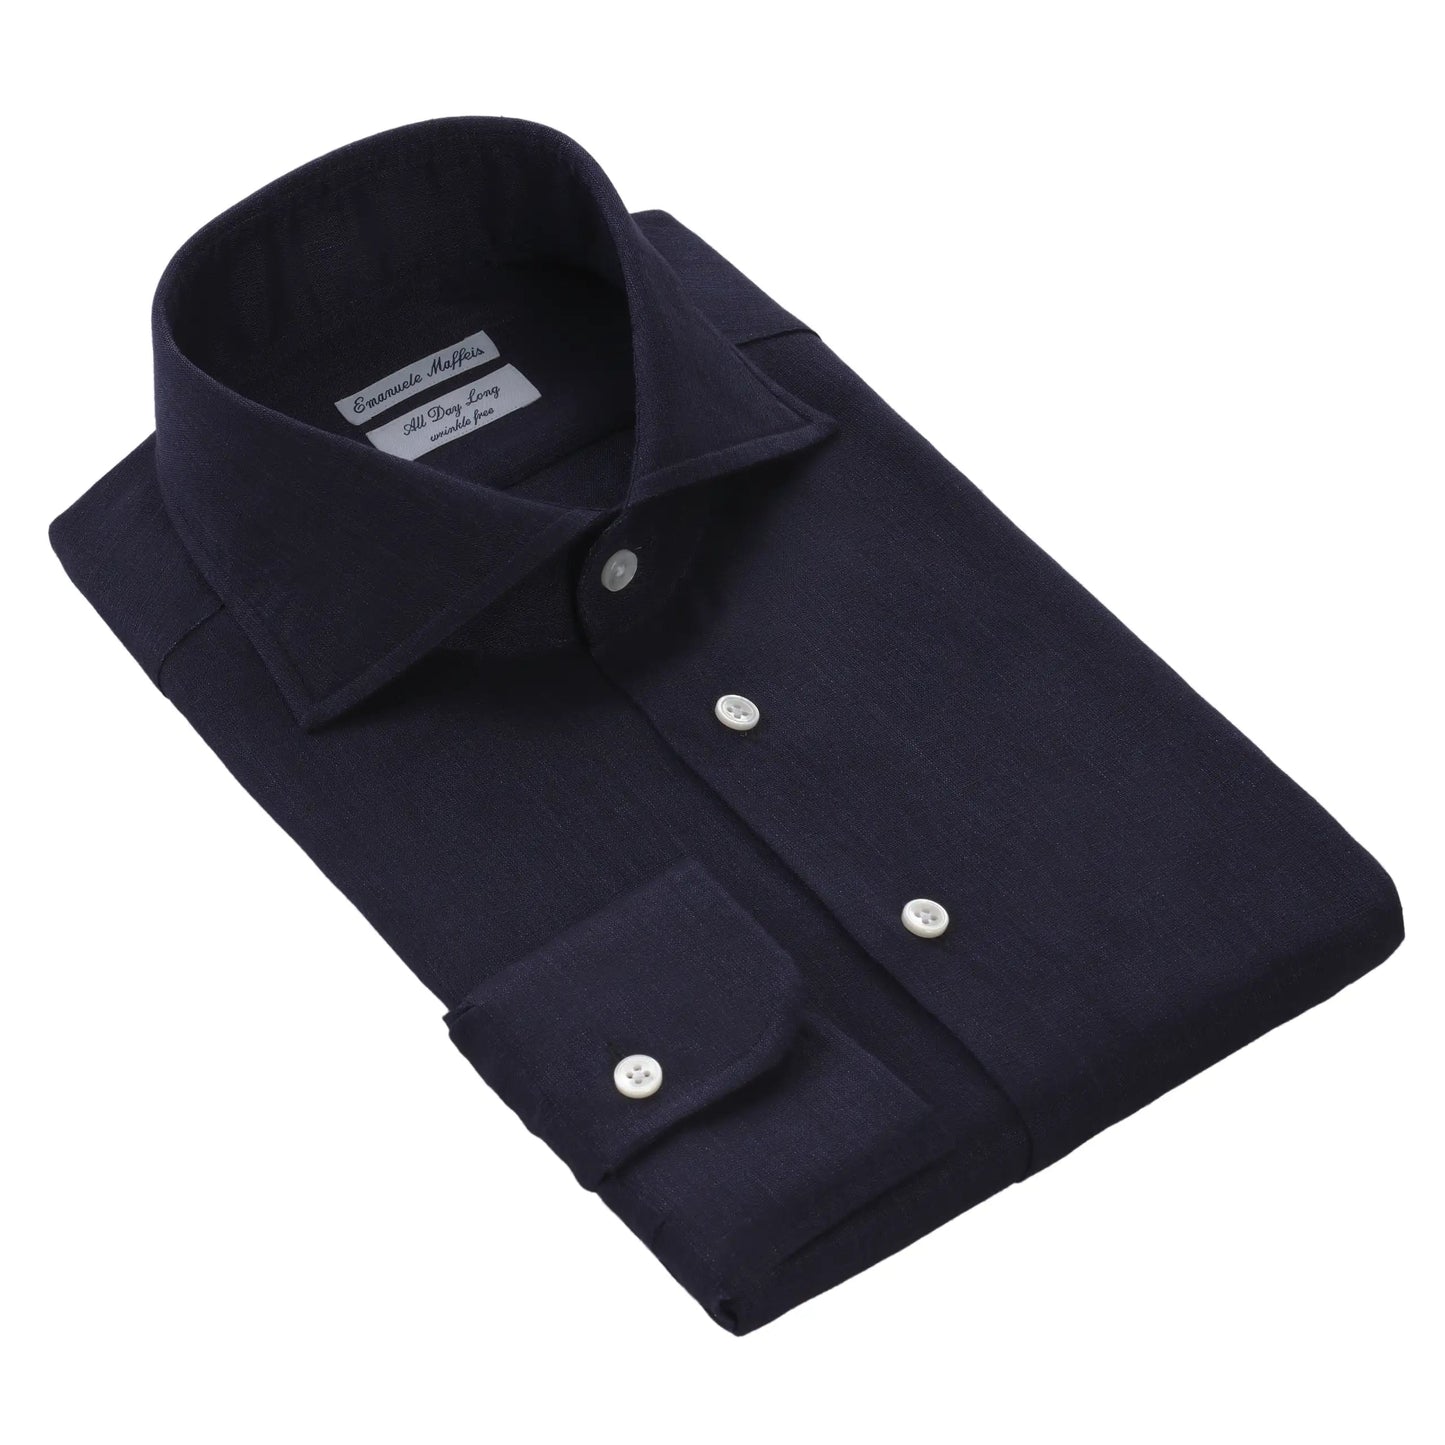 Emanuele Maffeis "All Day Long" Linen Shirt in Dark Blue - SARTALE